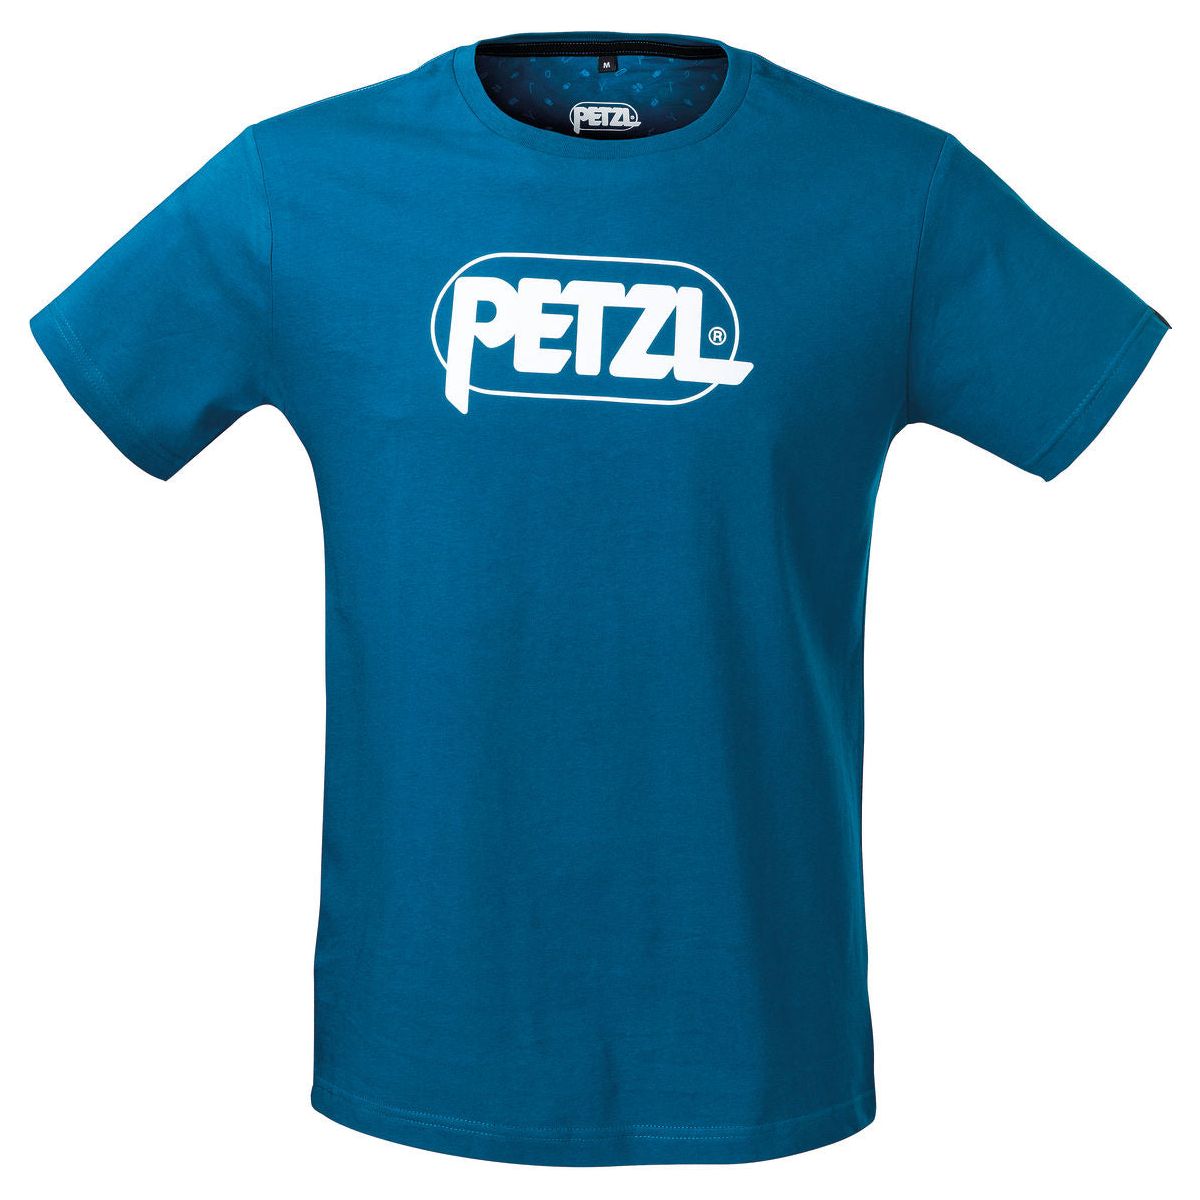 ADAM - חולצת PETZL לגברים